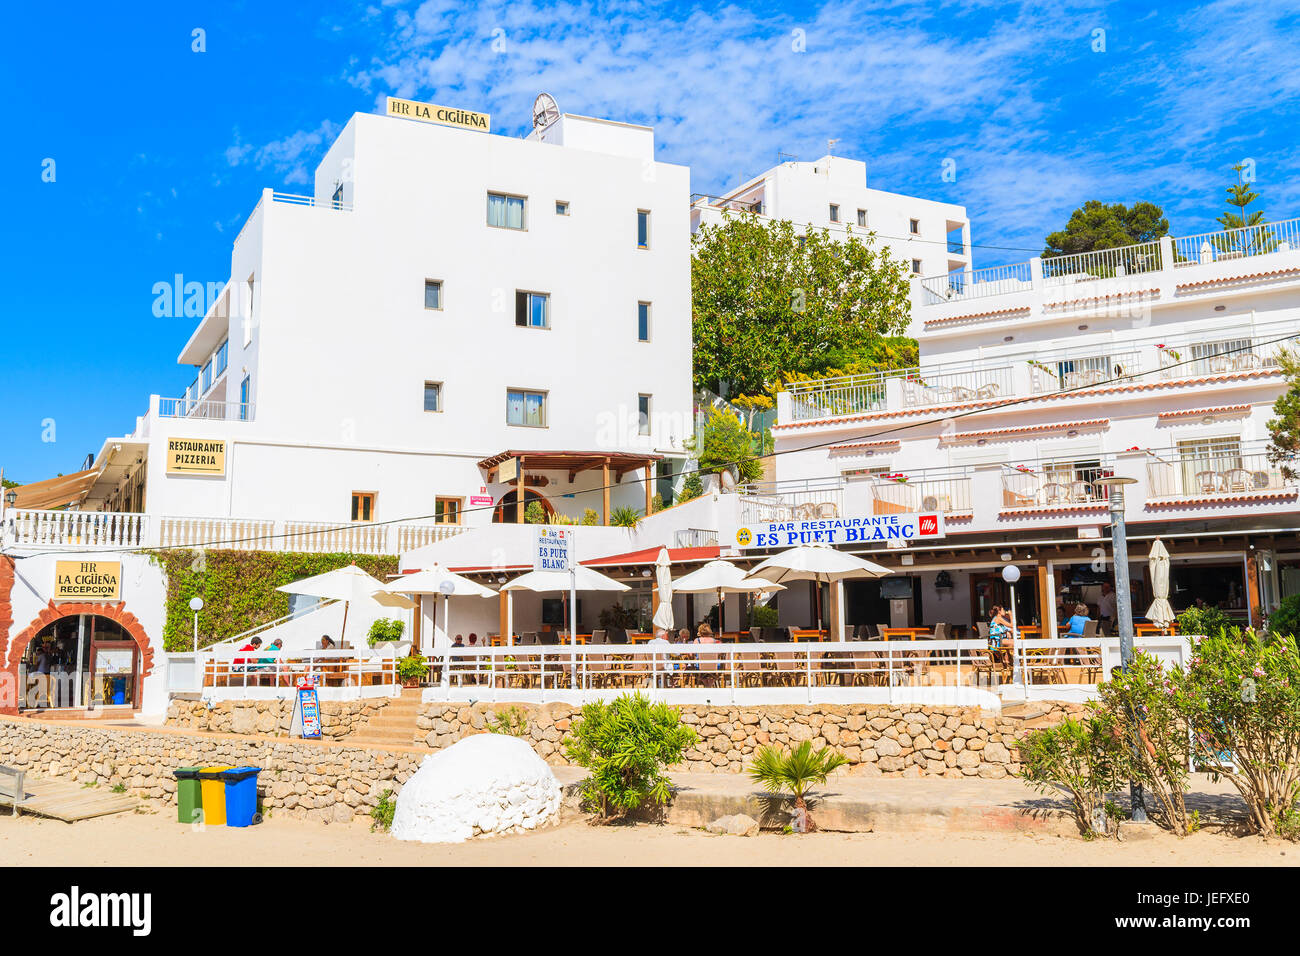 CALA PORTINATX BAY, IBIZA ISLAND - MAY 22, 2017: Hotel and restaurant buildings in Cala Portinatx bay on sunny summer day, Ibiza island, Spain. Stock Photo